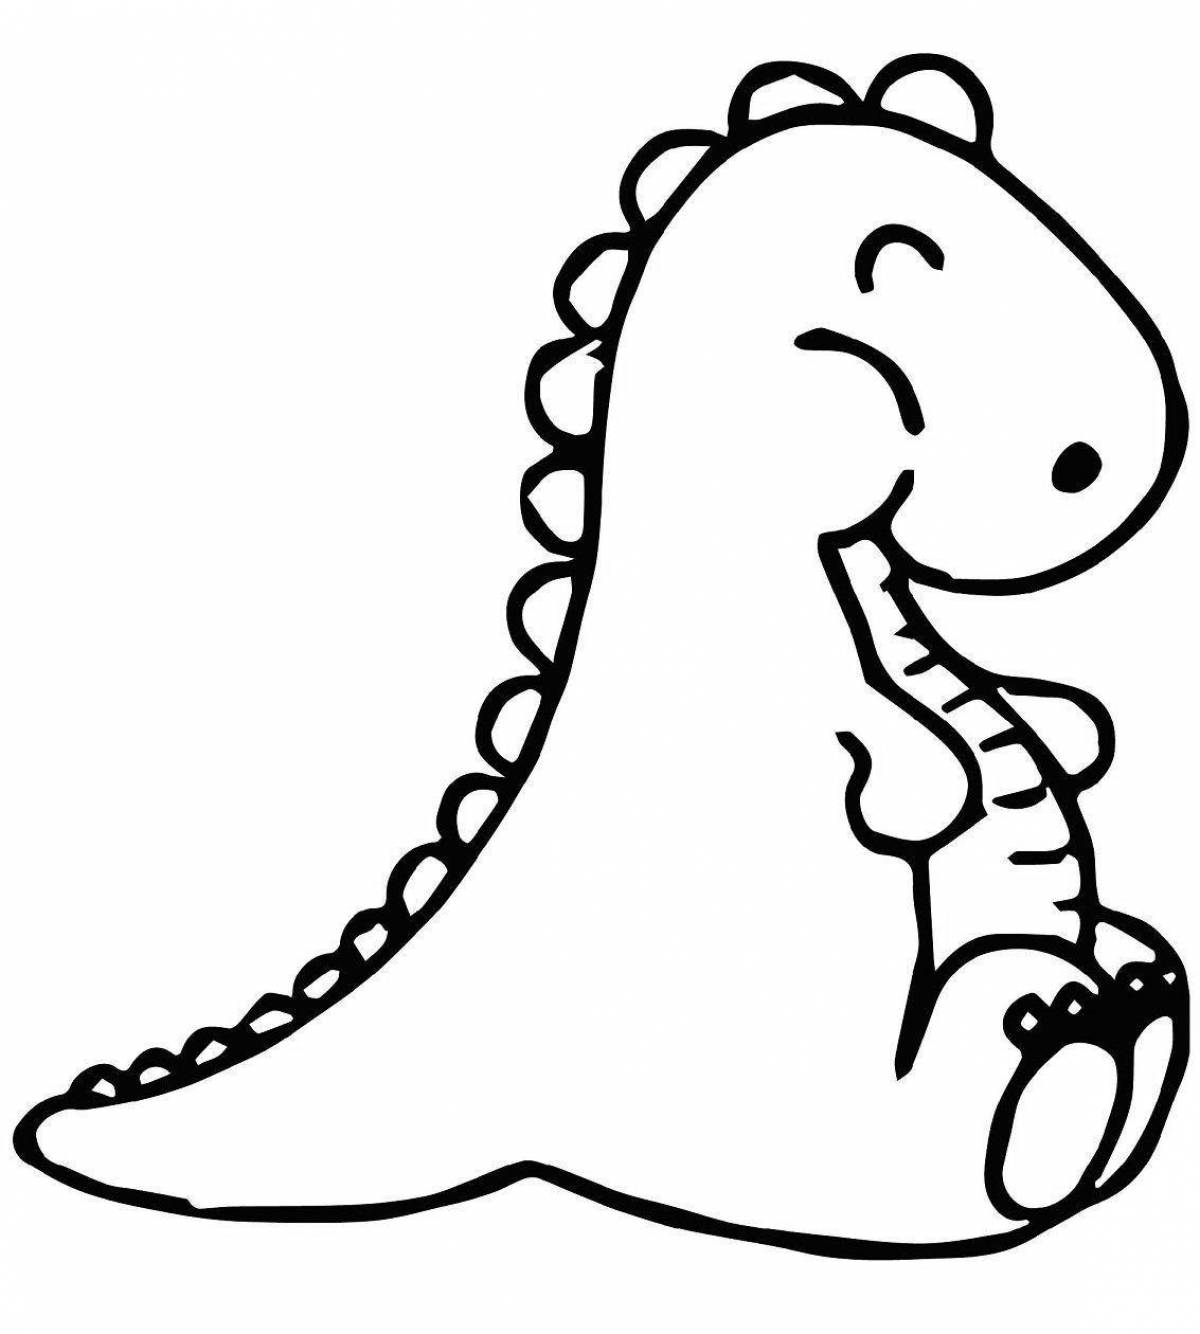 Joyful dinosaur coloring book for kids